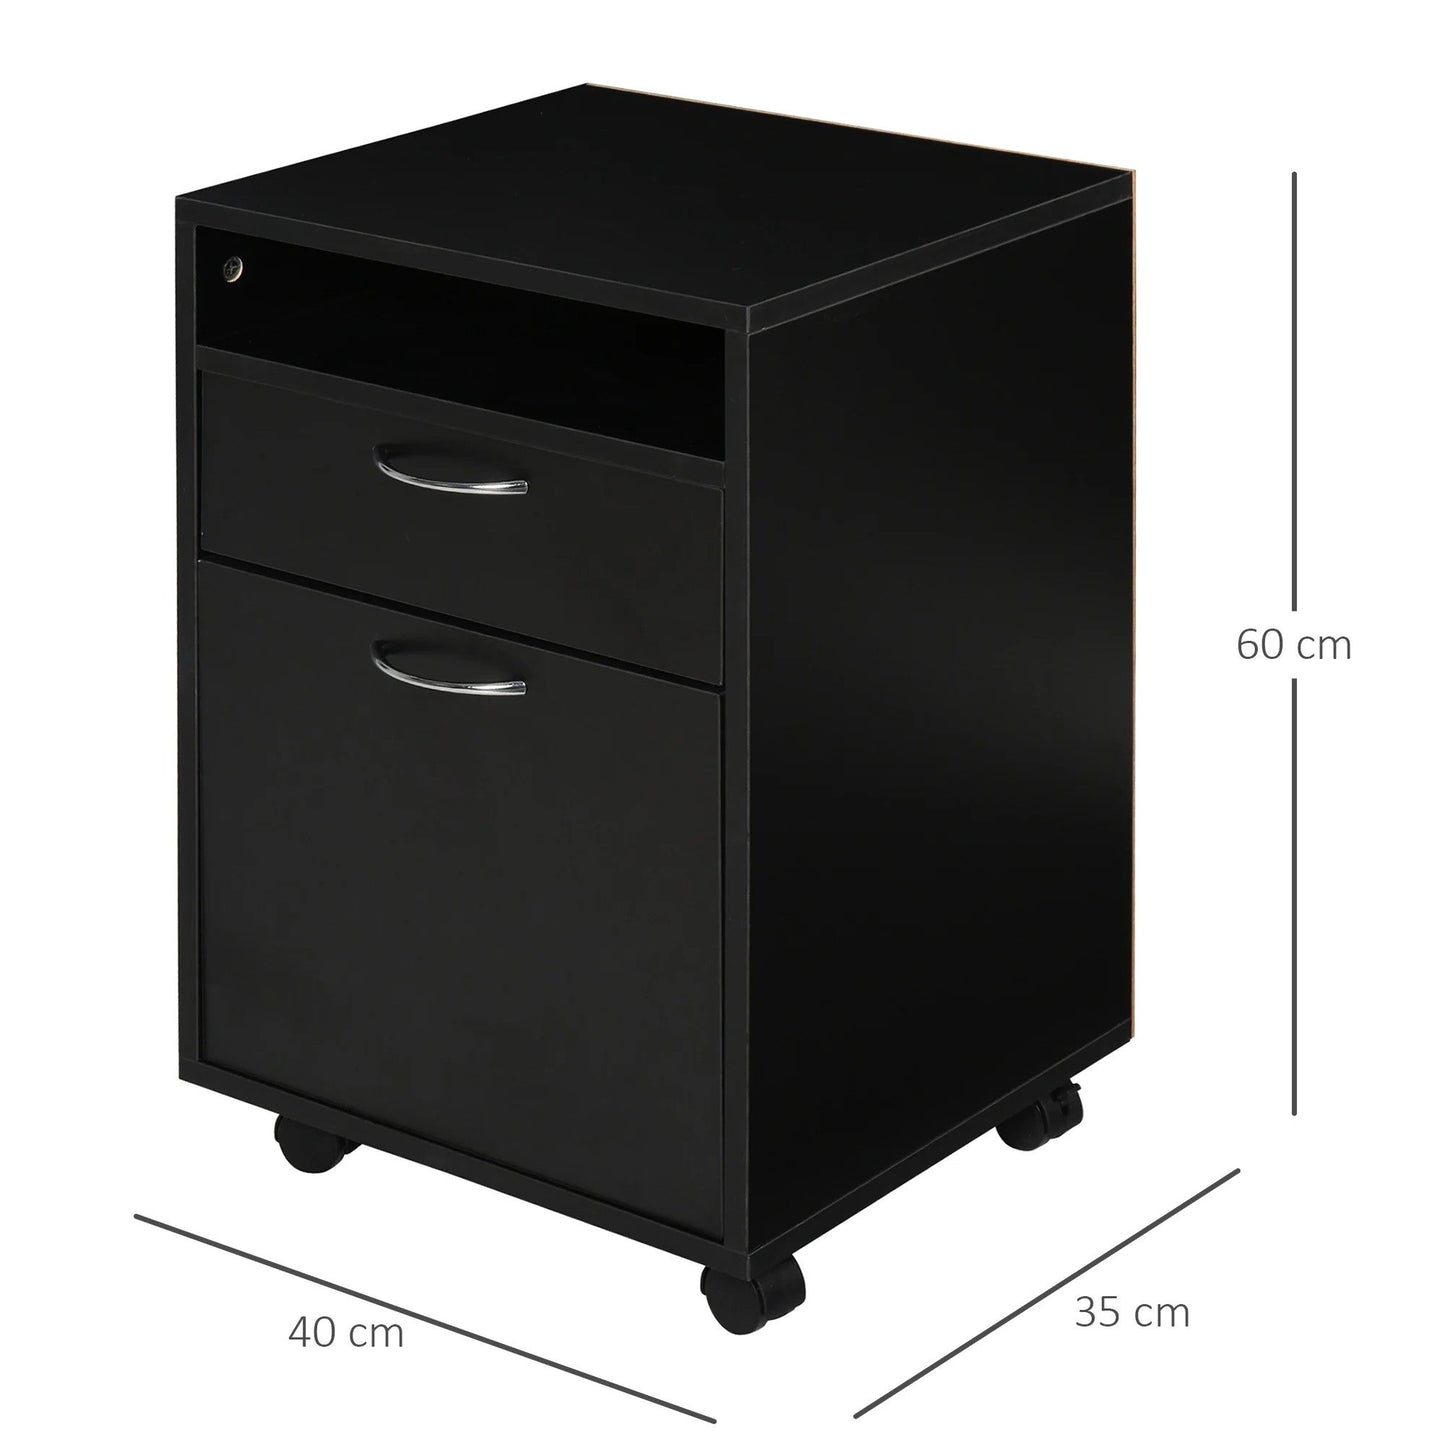 ProperAV 60cm 2-Drawer Office Home Storage Cabinet - maplin.co.uk